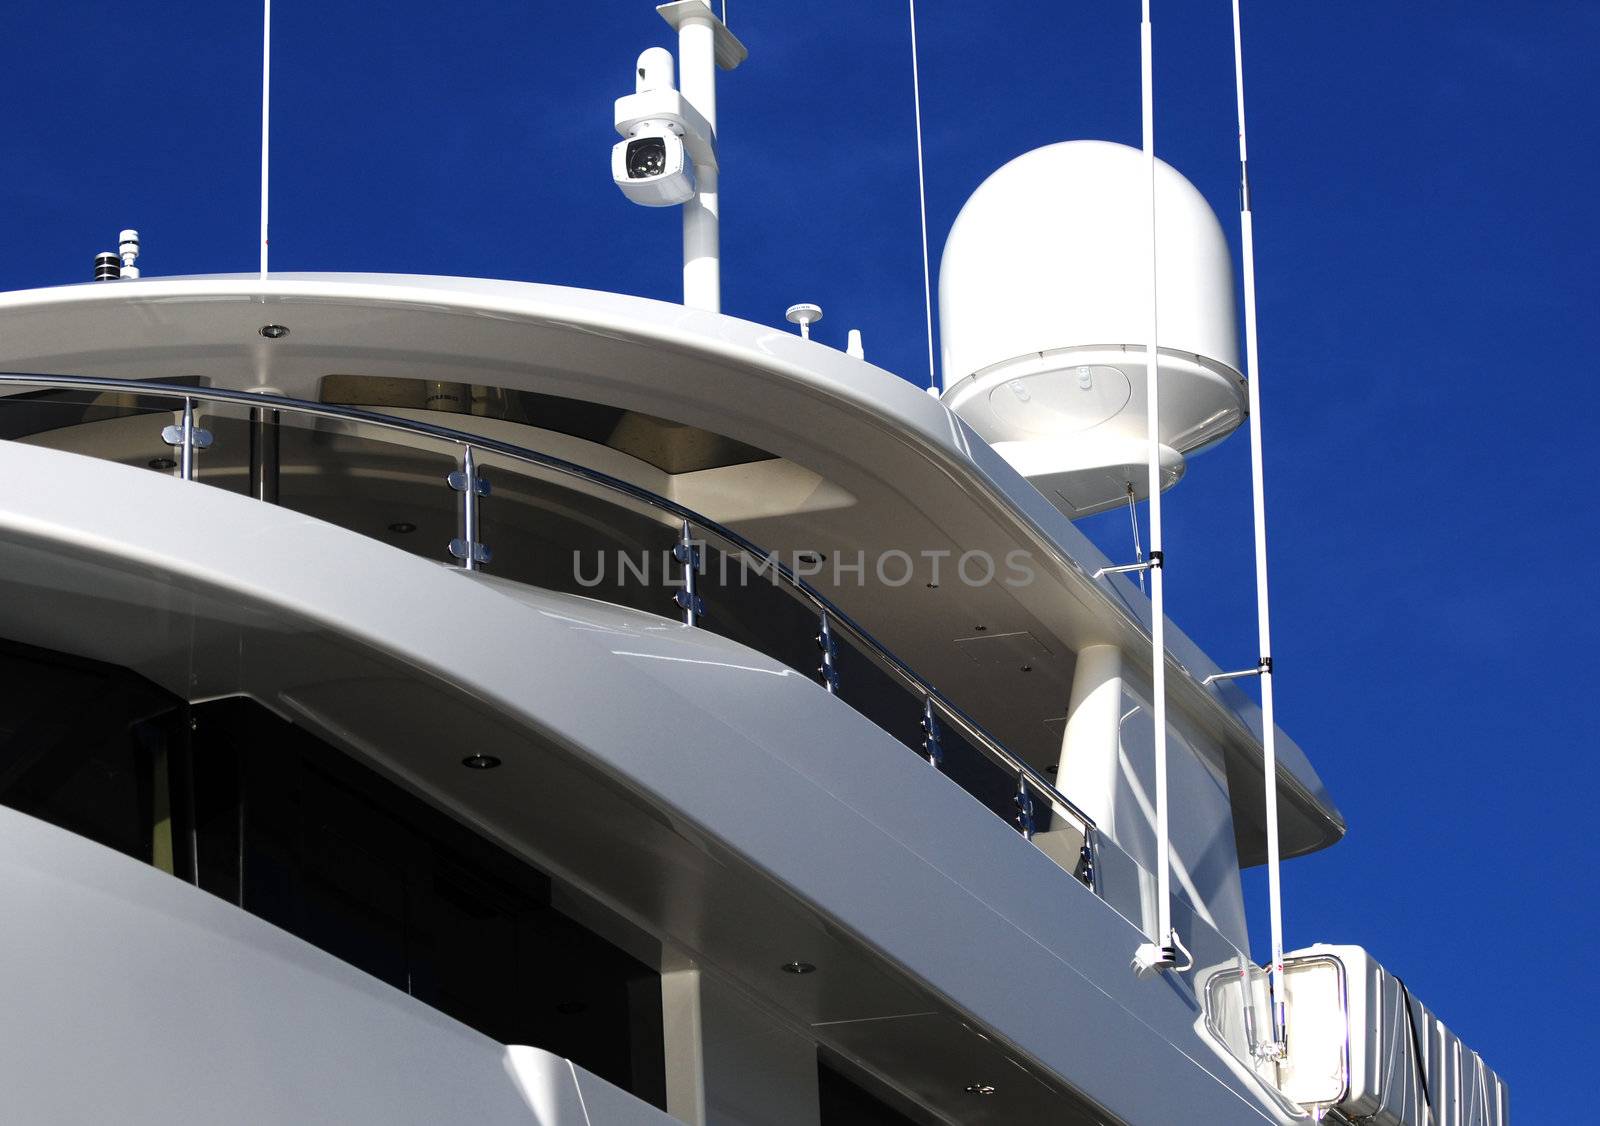 Close up of radar and night vision camera on yacht